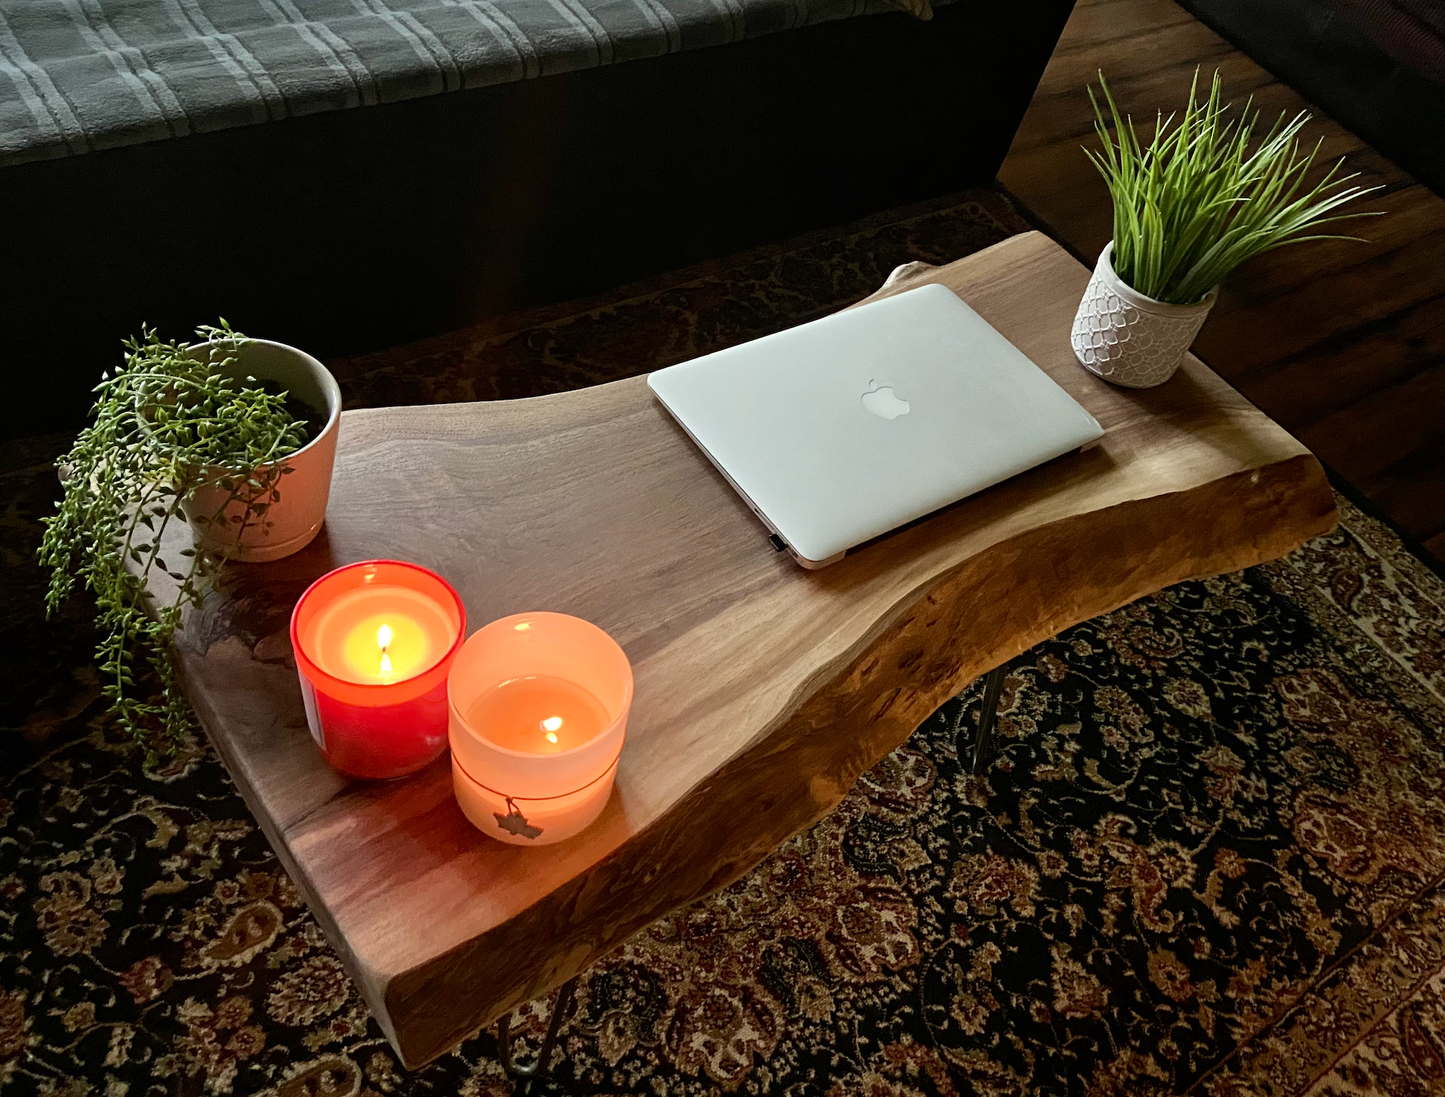 SET - Rustic Live Edge Walnut Wood Coffee Table and Live Edge Walnut Floating Shelf Furniture Set